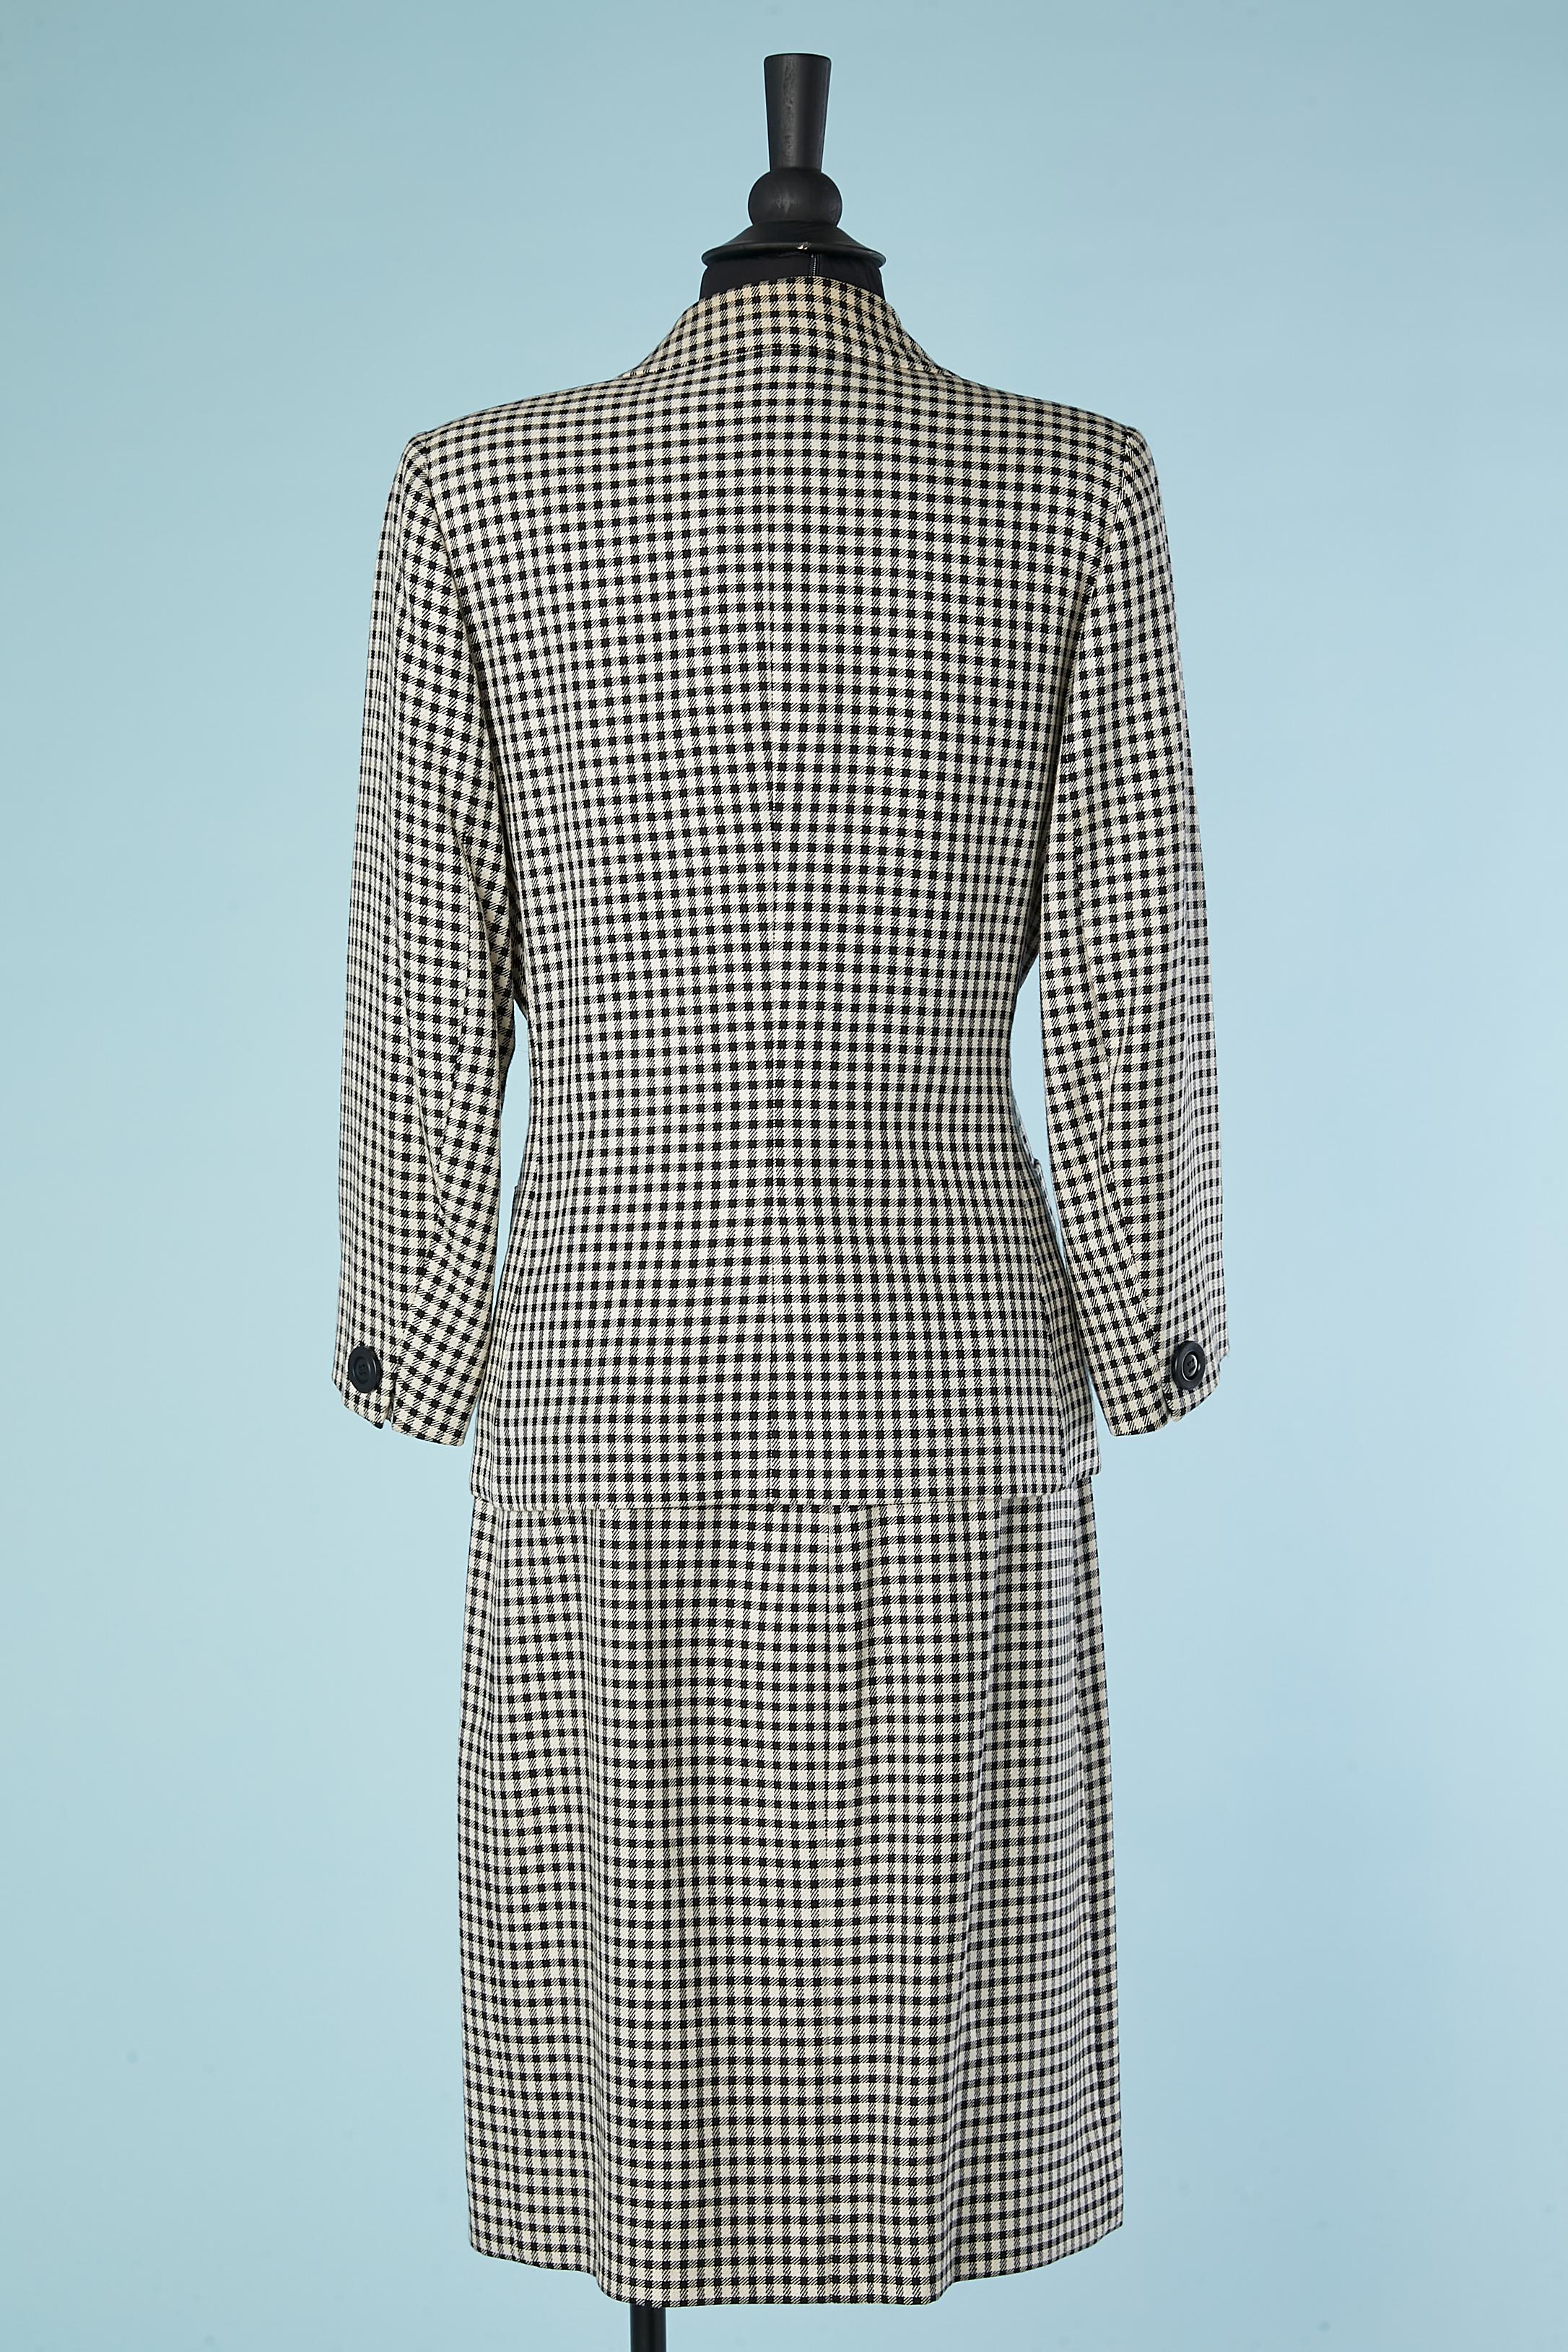 Black and white mini check pattern skirt-suit Yves Saint Laurent Variation  For Sale 1